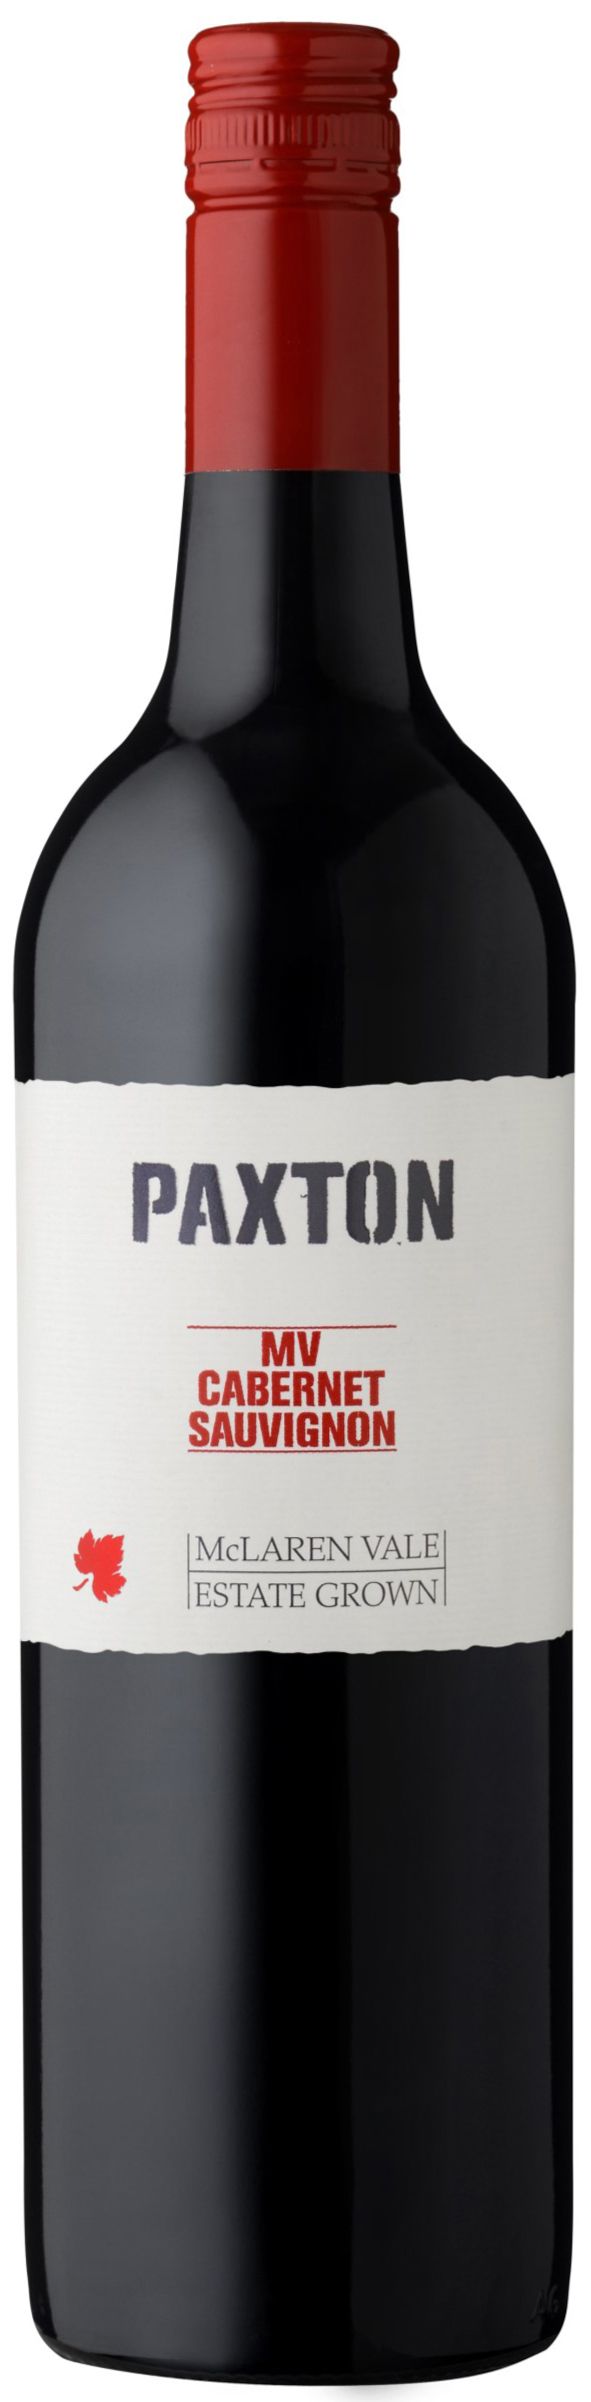 Paxton, Mv Cabernet Sauvignon Organic, 2016